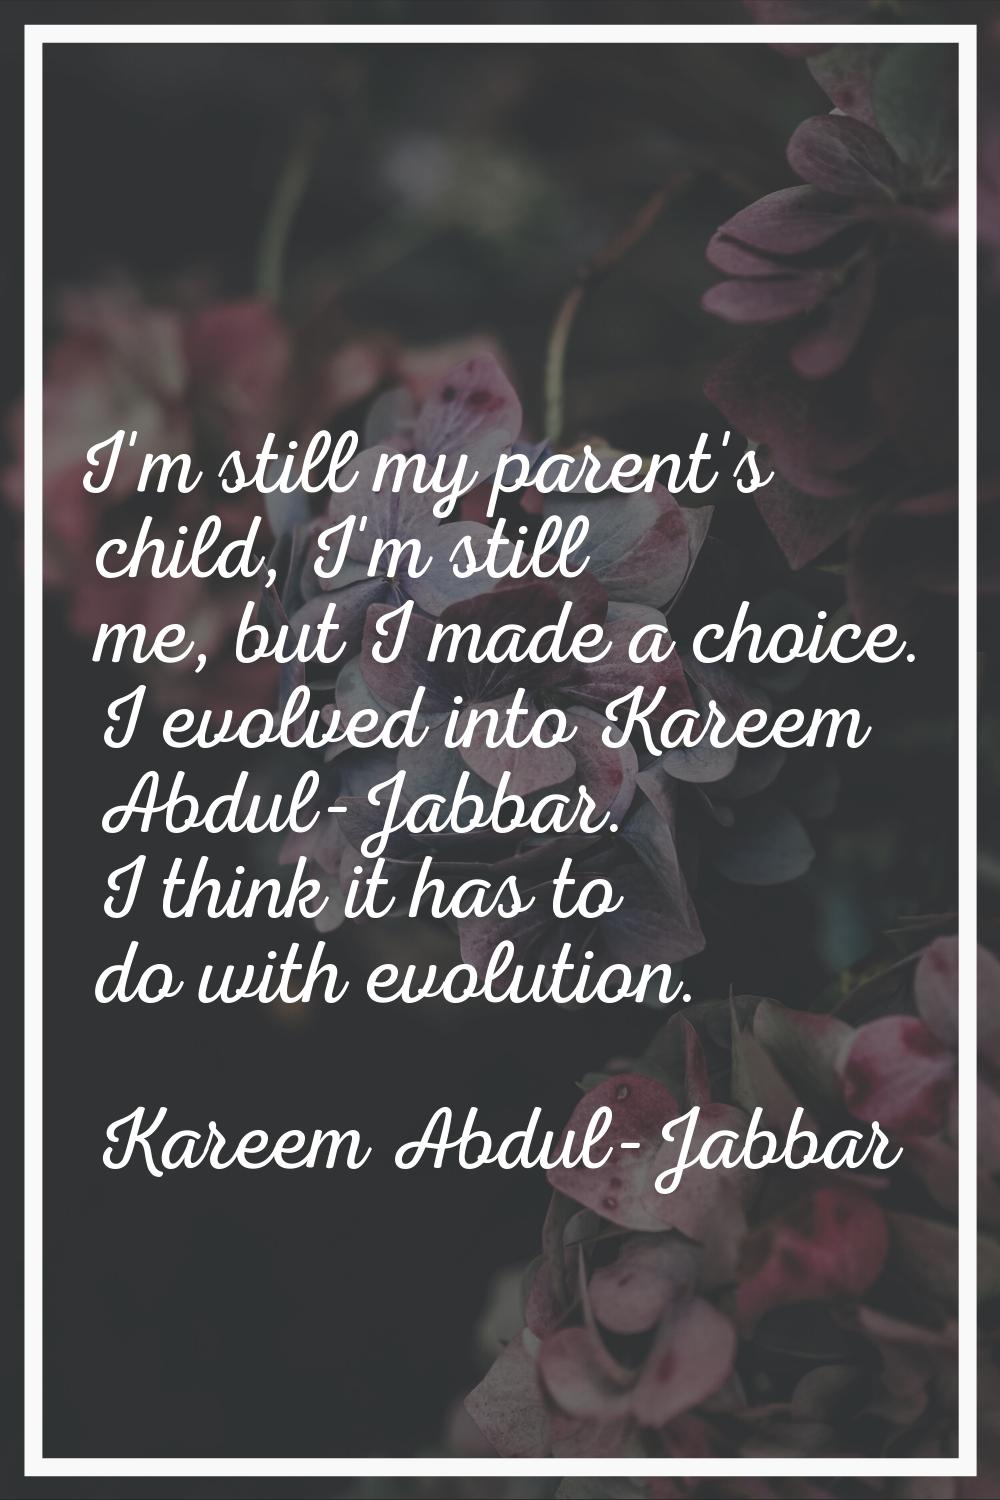 I'm still my parent's child, I'm still me, but I made a choice. I evolved into Kareem Abdul-Jabbar.